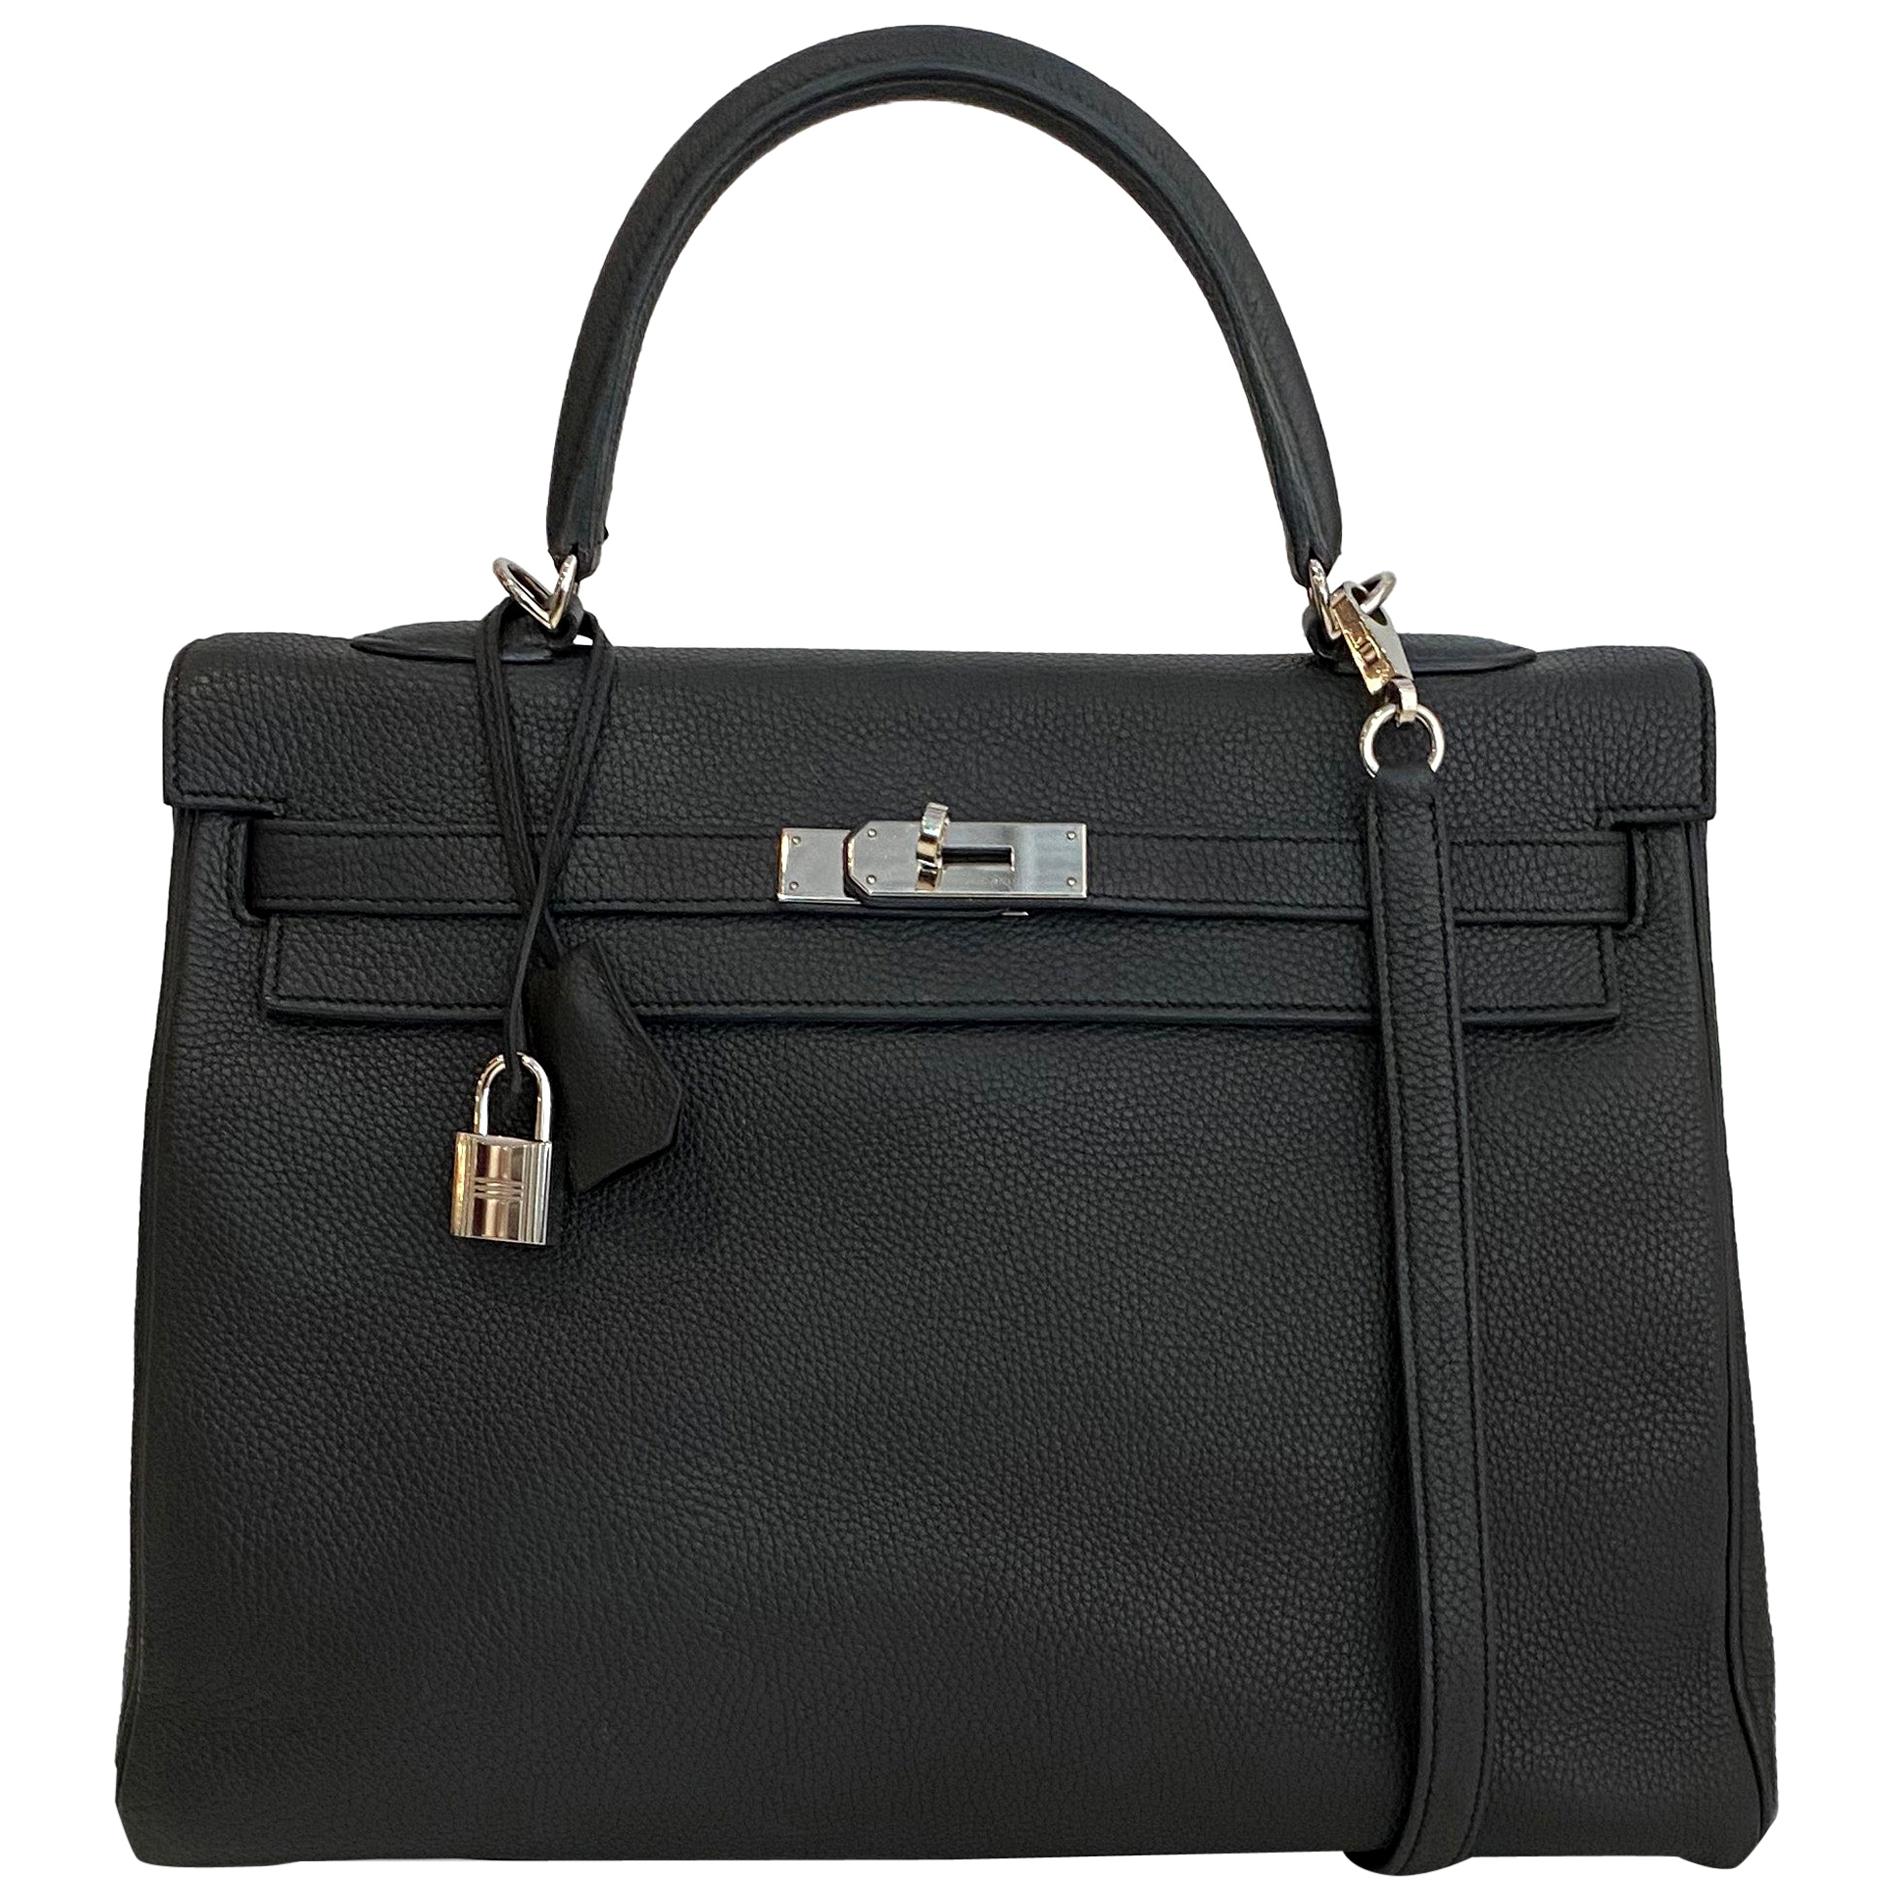 Hermes 35cm Black Togo Leather Kelly Bag w/ Palladium Hardware BOX/DUST BAG